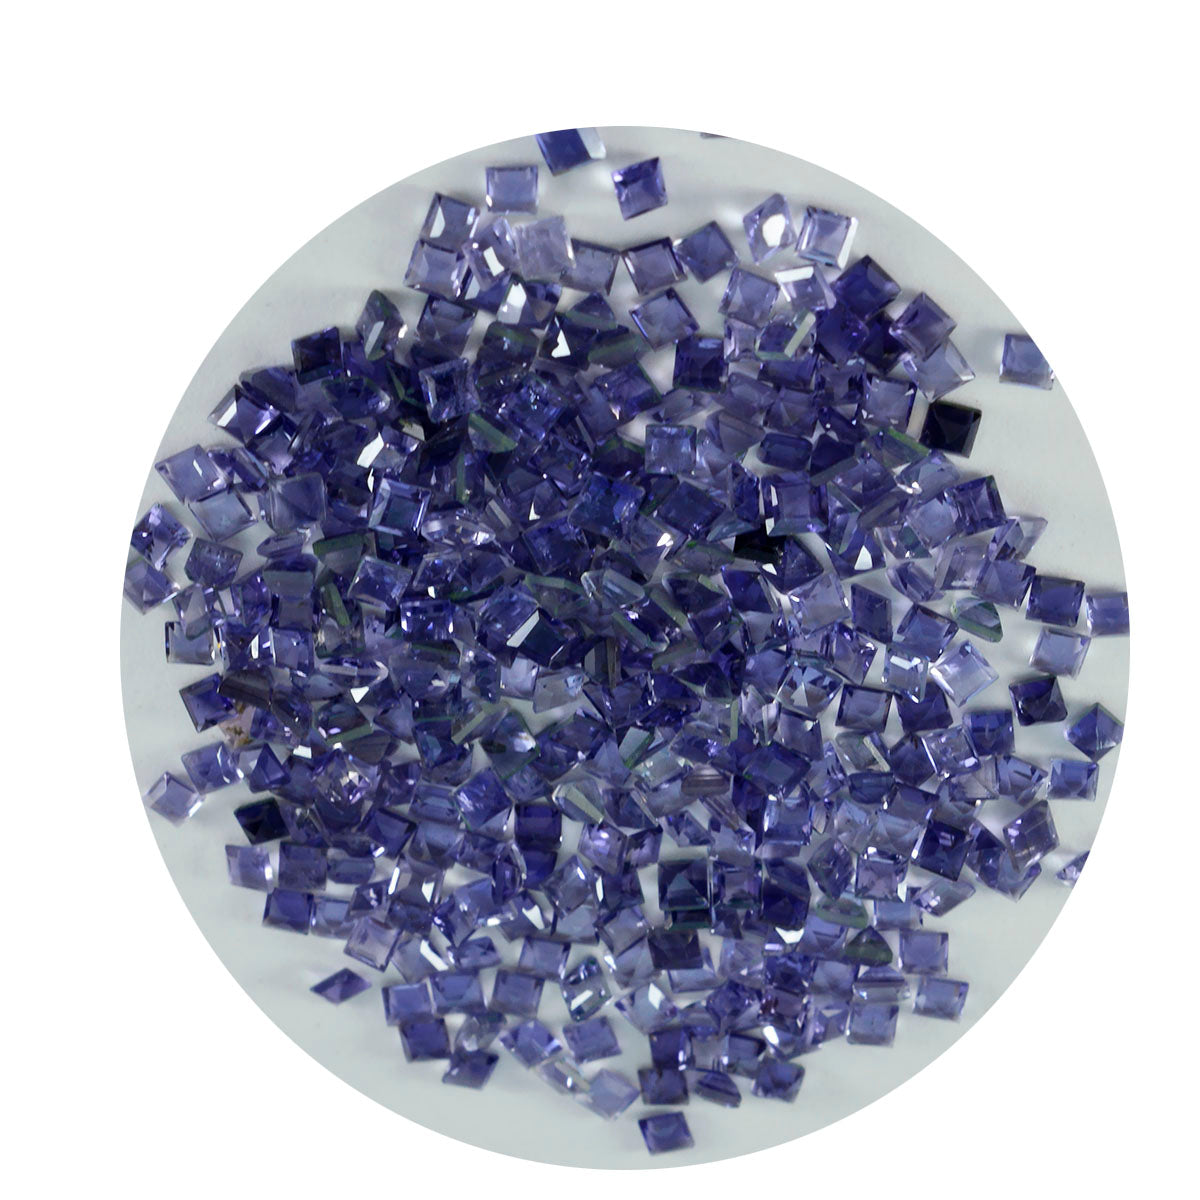 Riyogems 1PC Blue Iolite Faceted 3x3 mm Square Shape cute Quality Loose Gemstone